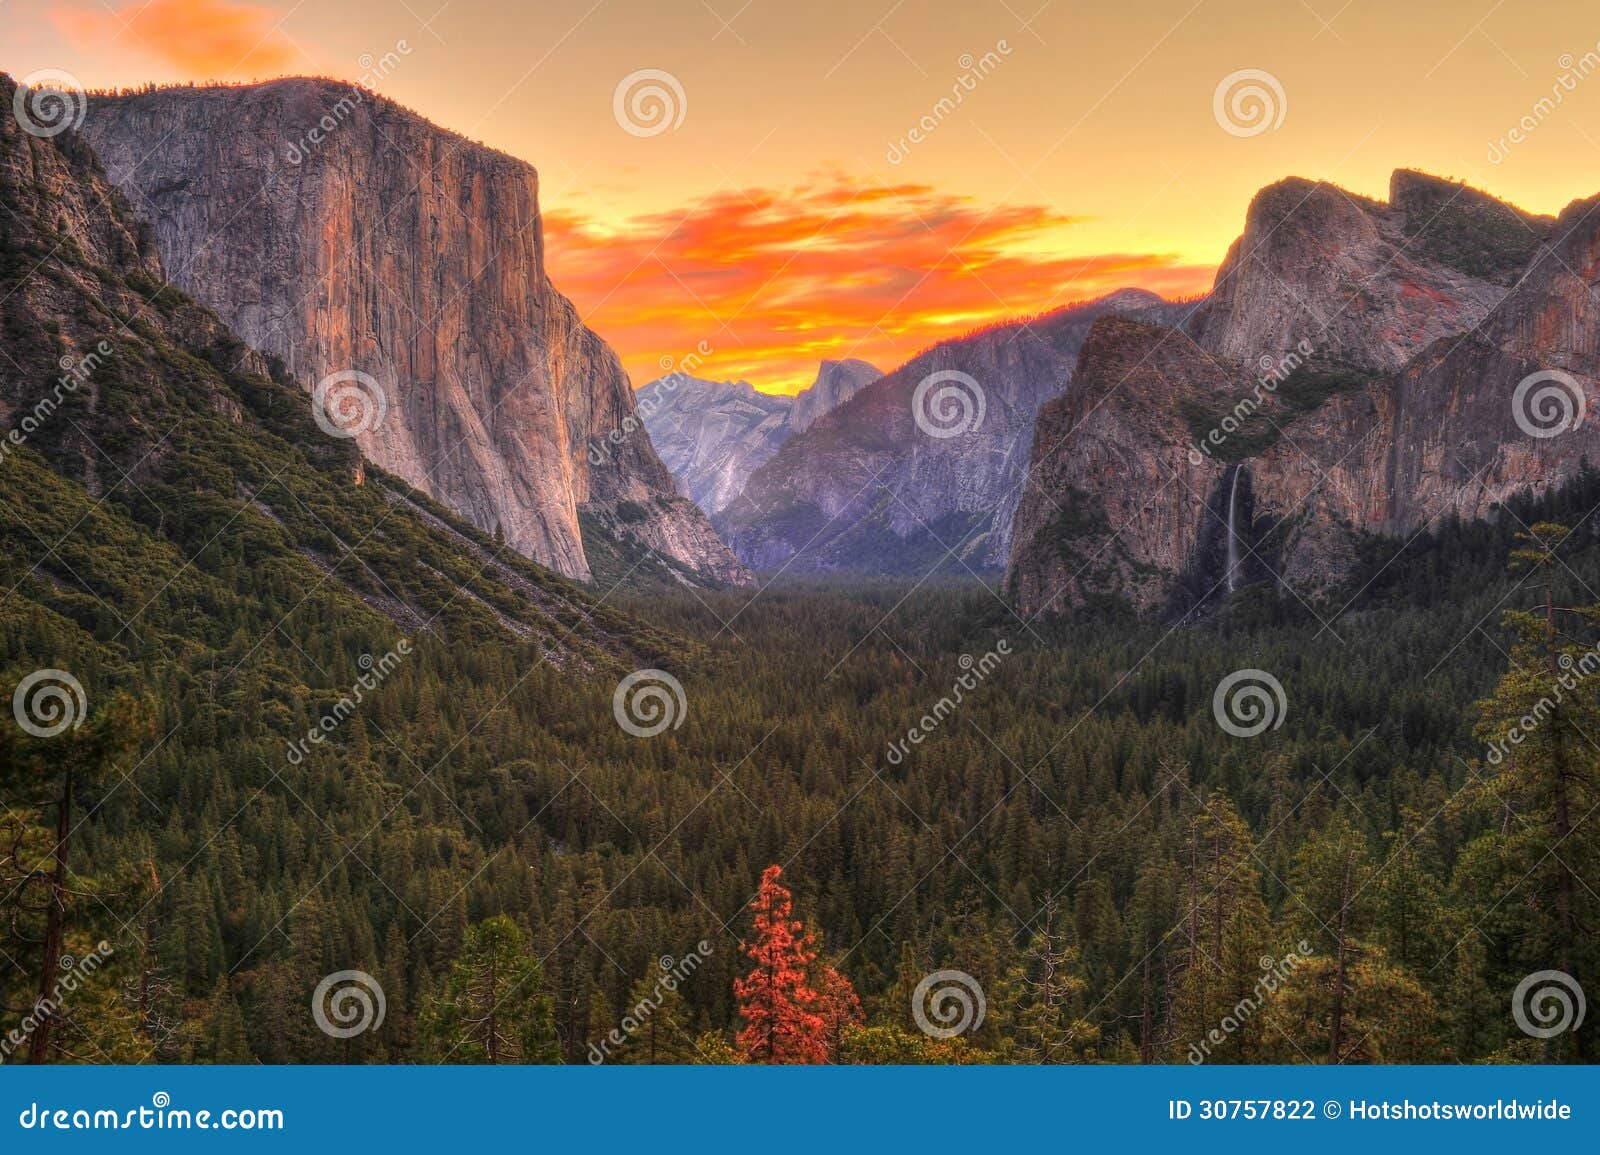 breathtaking yosemite national park at sunrise / dawn, california